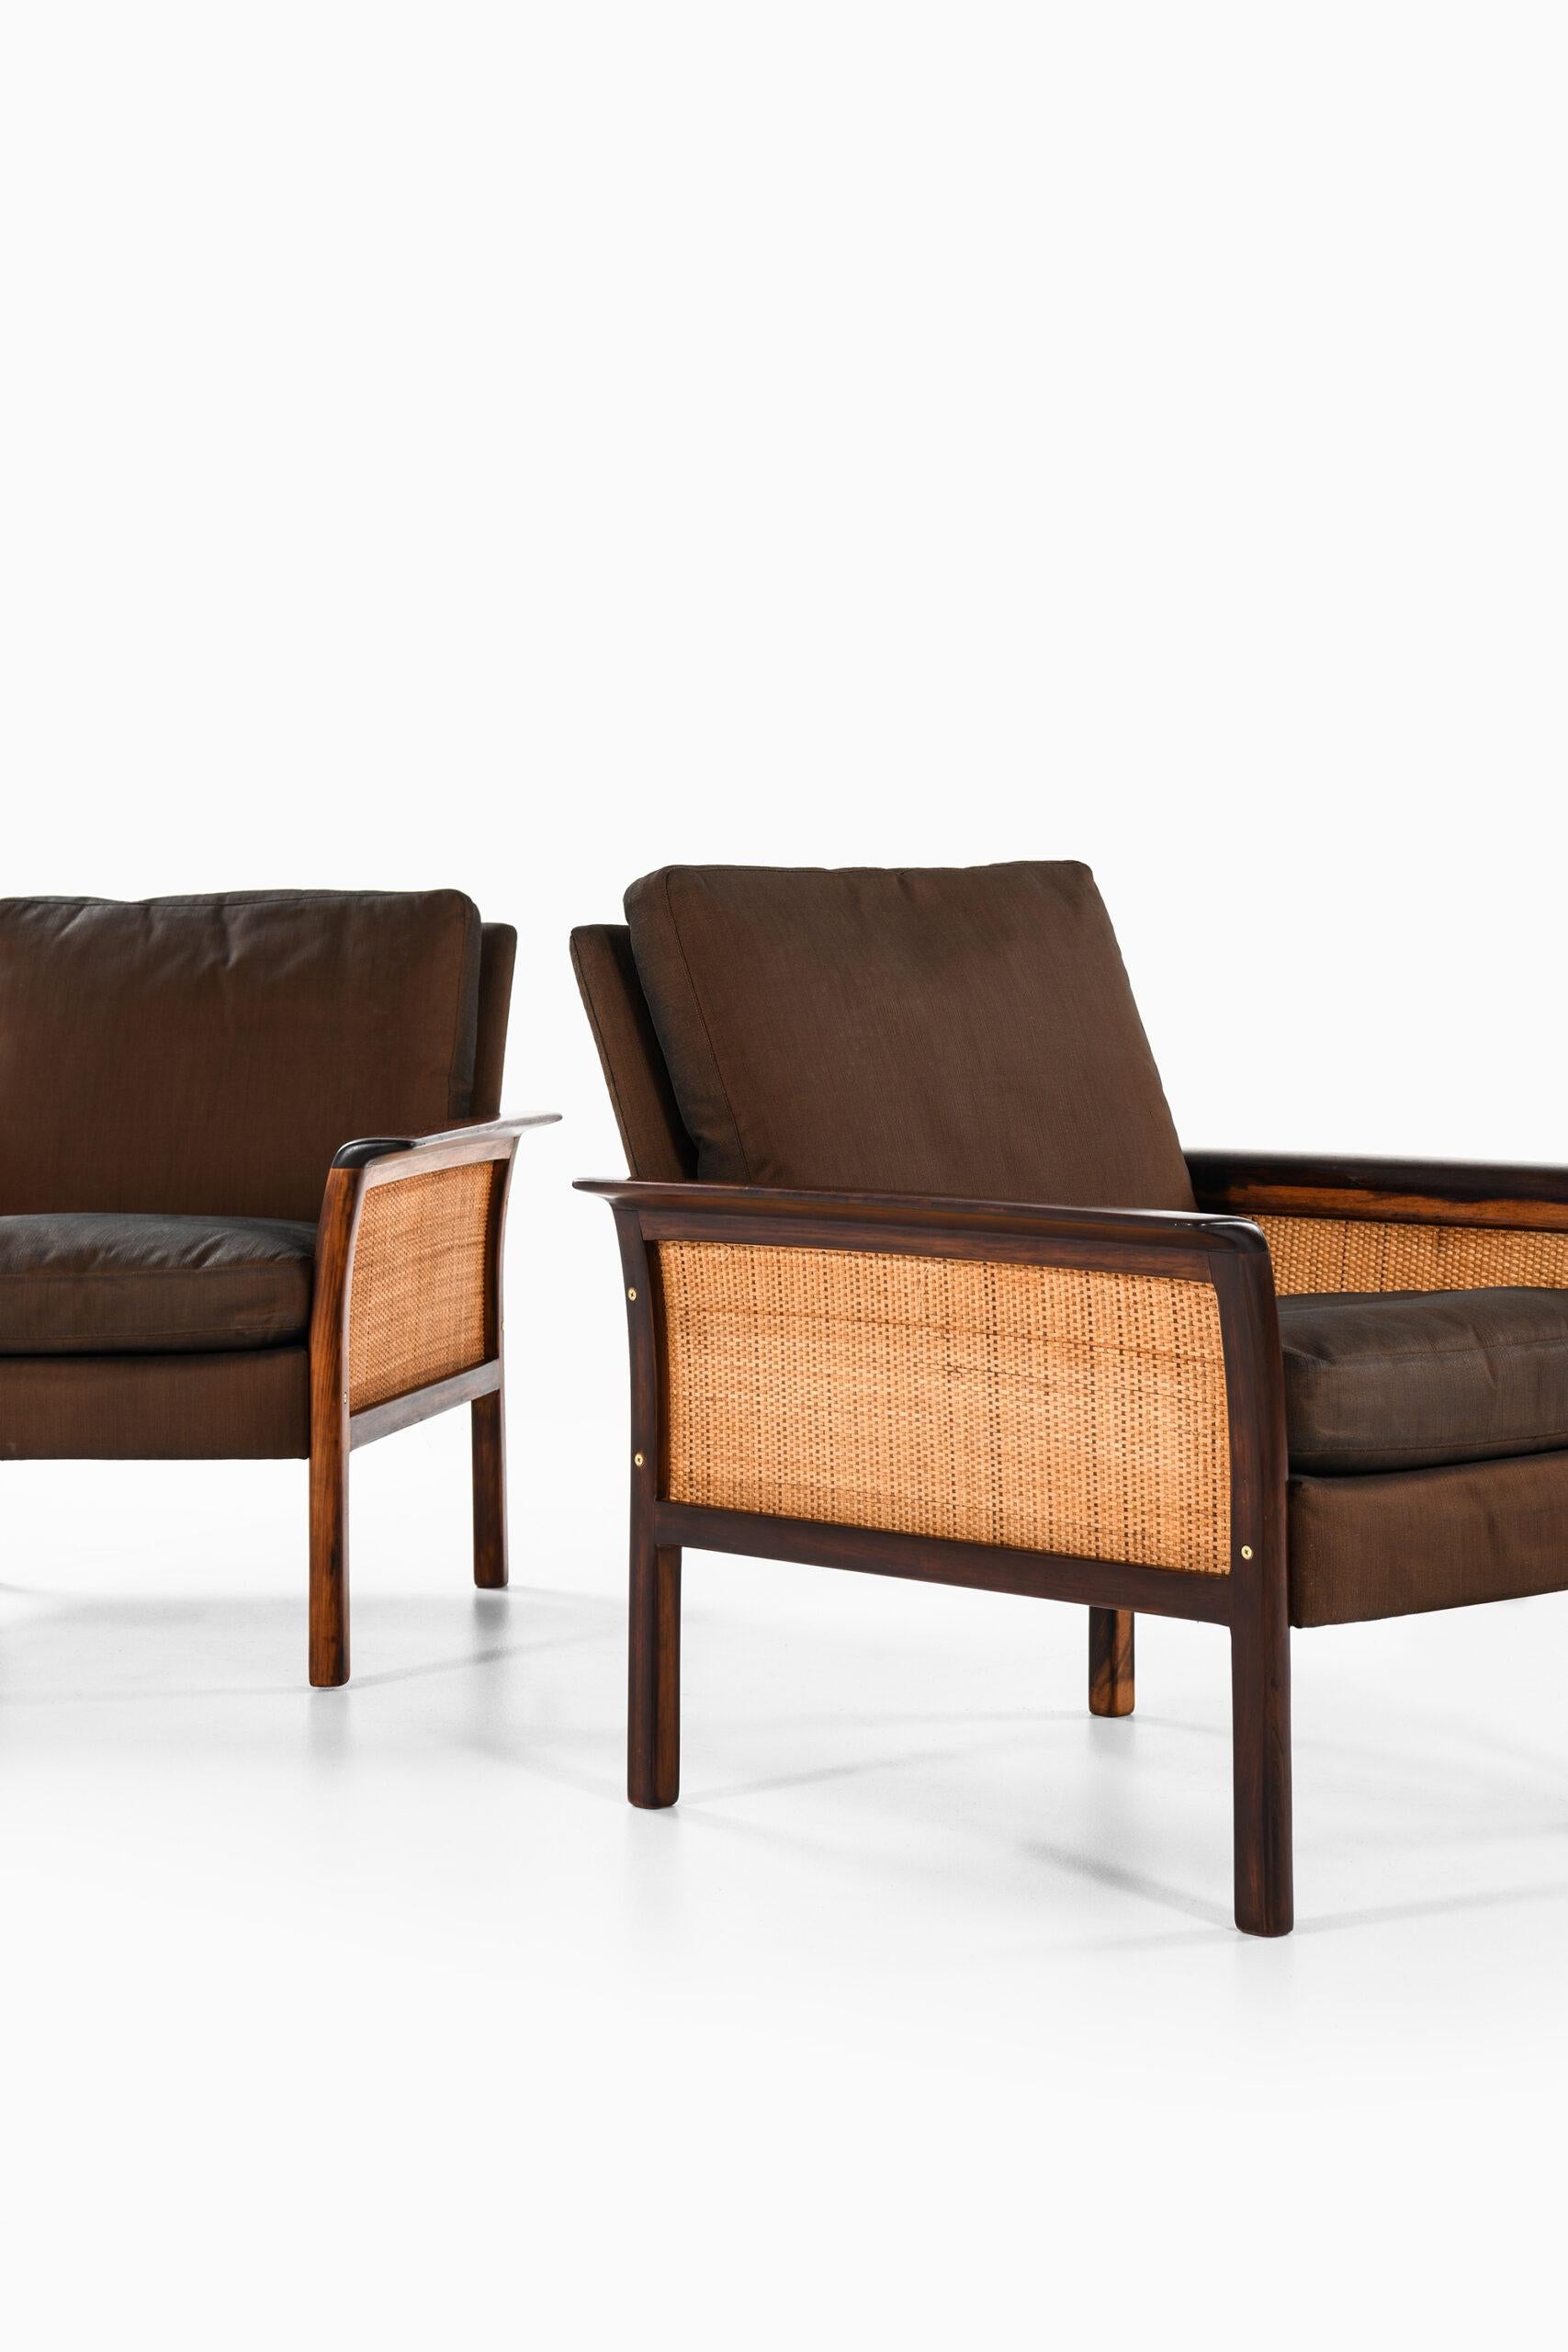 Scandinavian Modern Hans Olsen Easy Chairs Model 500 Produced by C/S Møbler For Sale